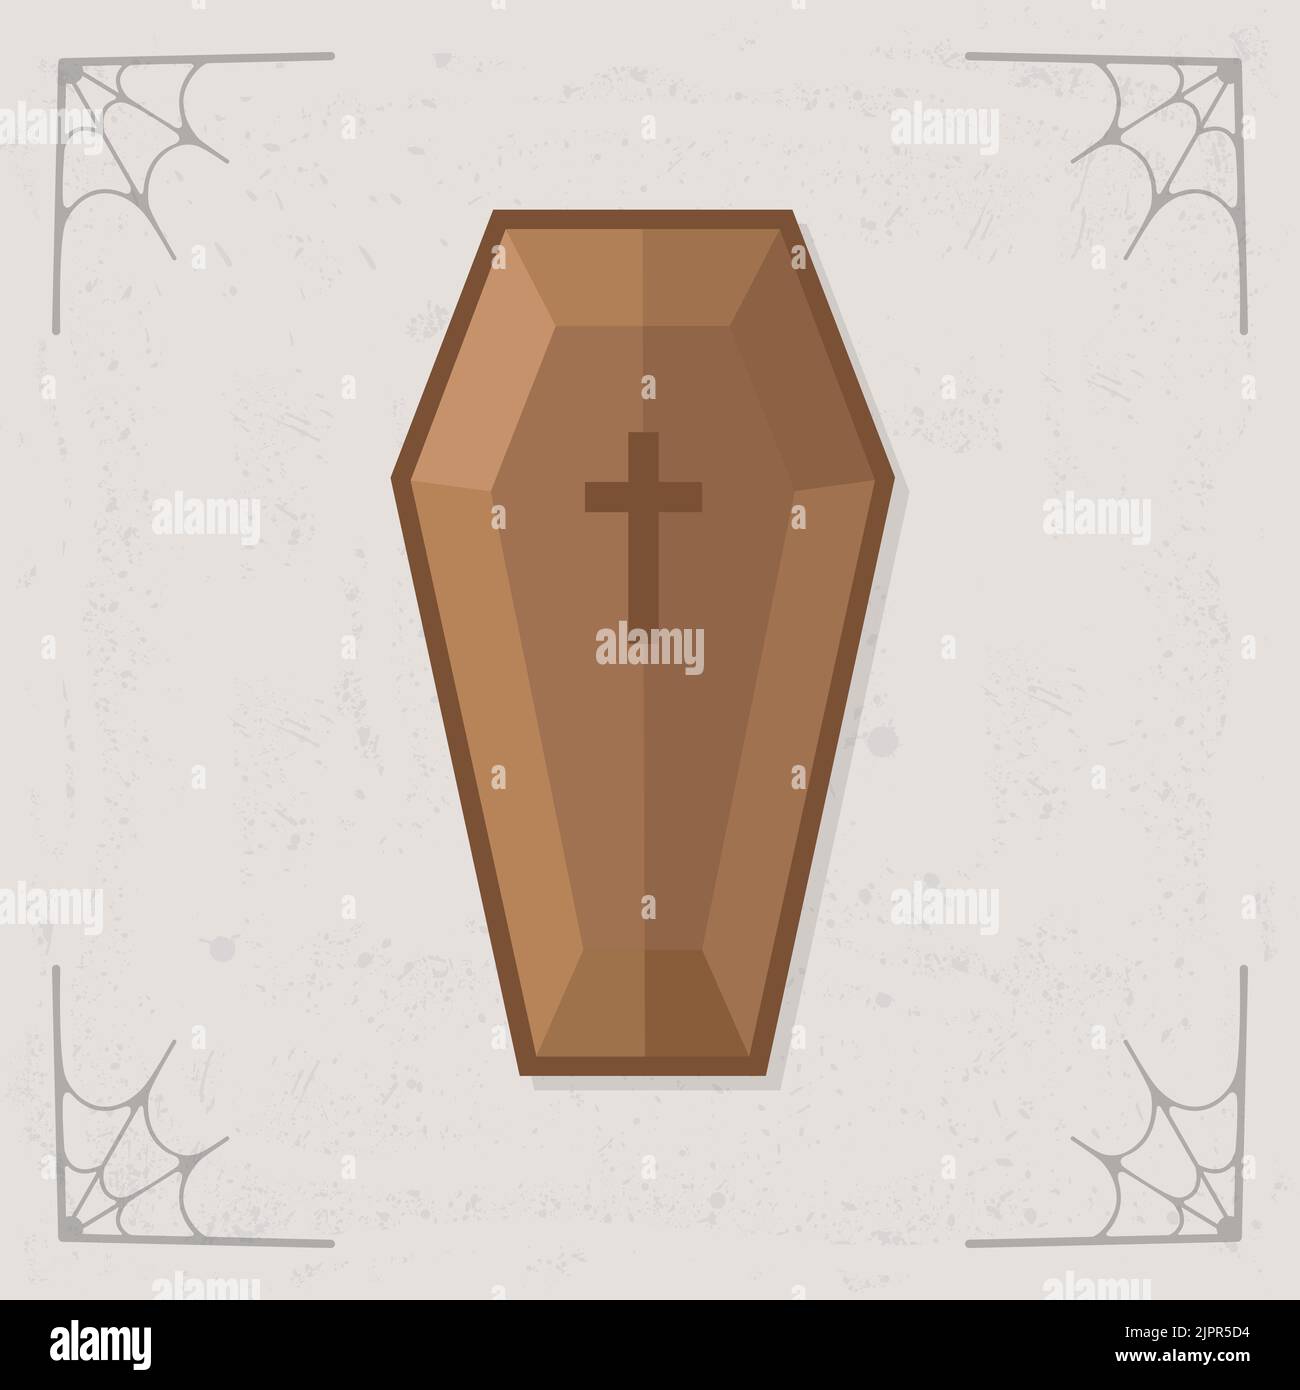 Coffin icon. Wooden vampire coffin. Halloween illustration isolated on stylized gray background. Vector illustration Stock Vector